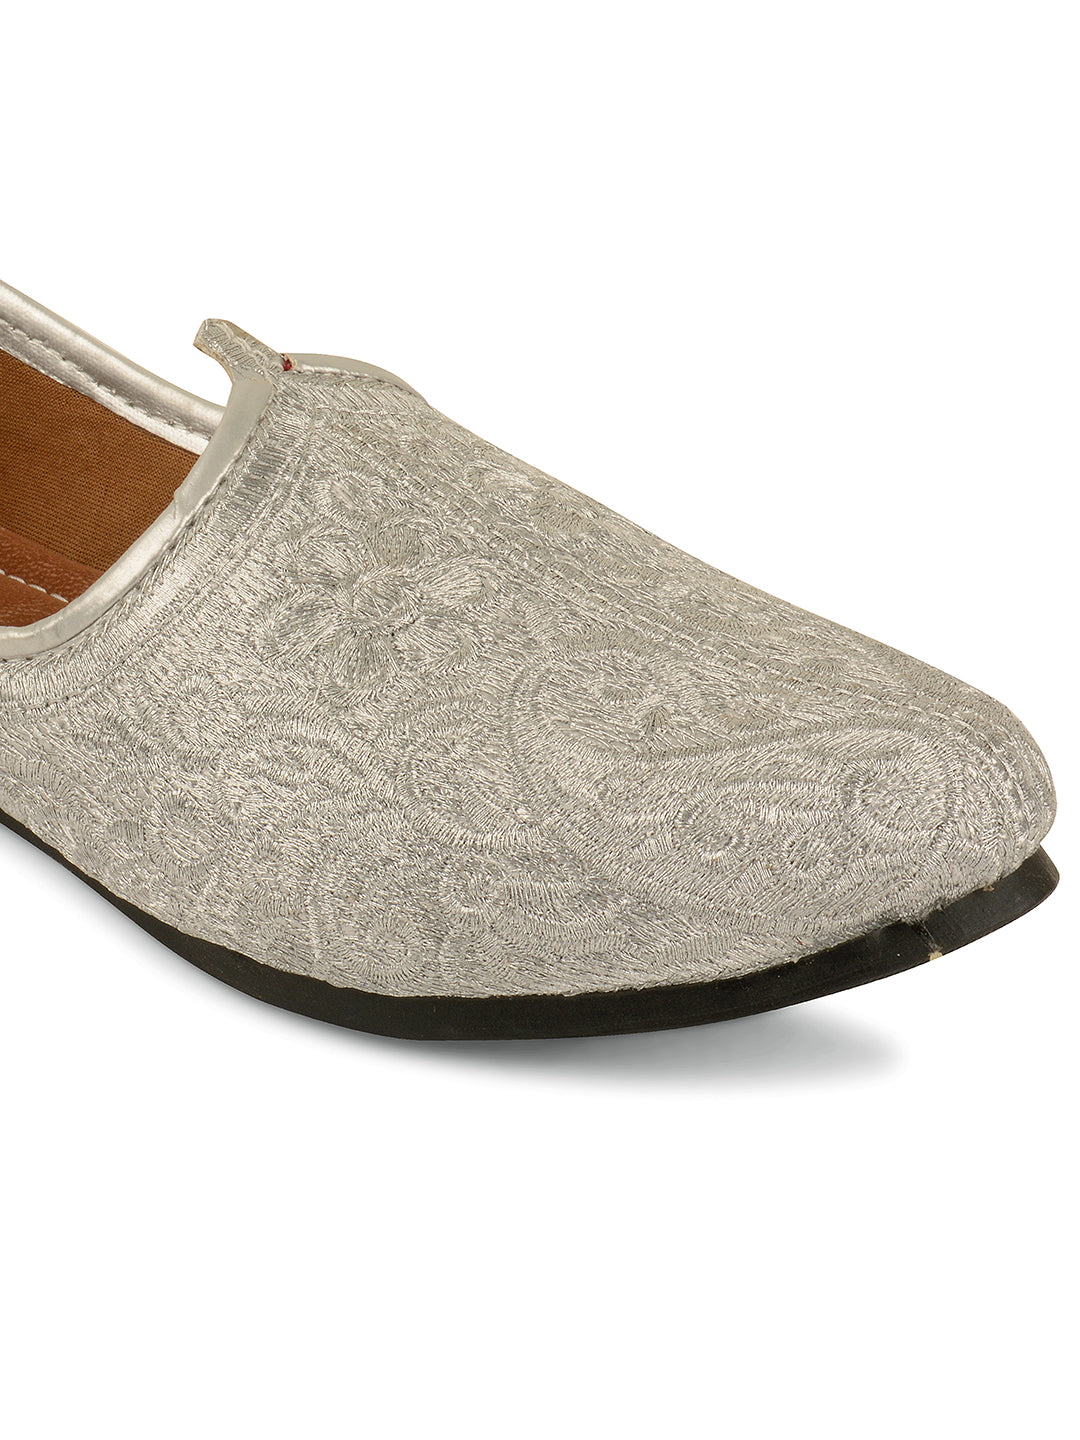 DESI COLOUR Mens Silver Ethnic Footwear/Punjabi Jutti